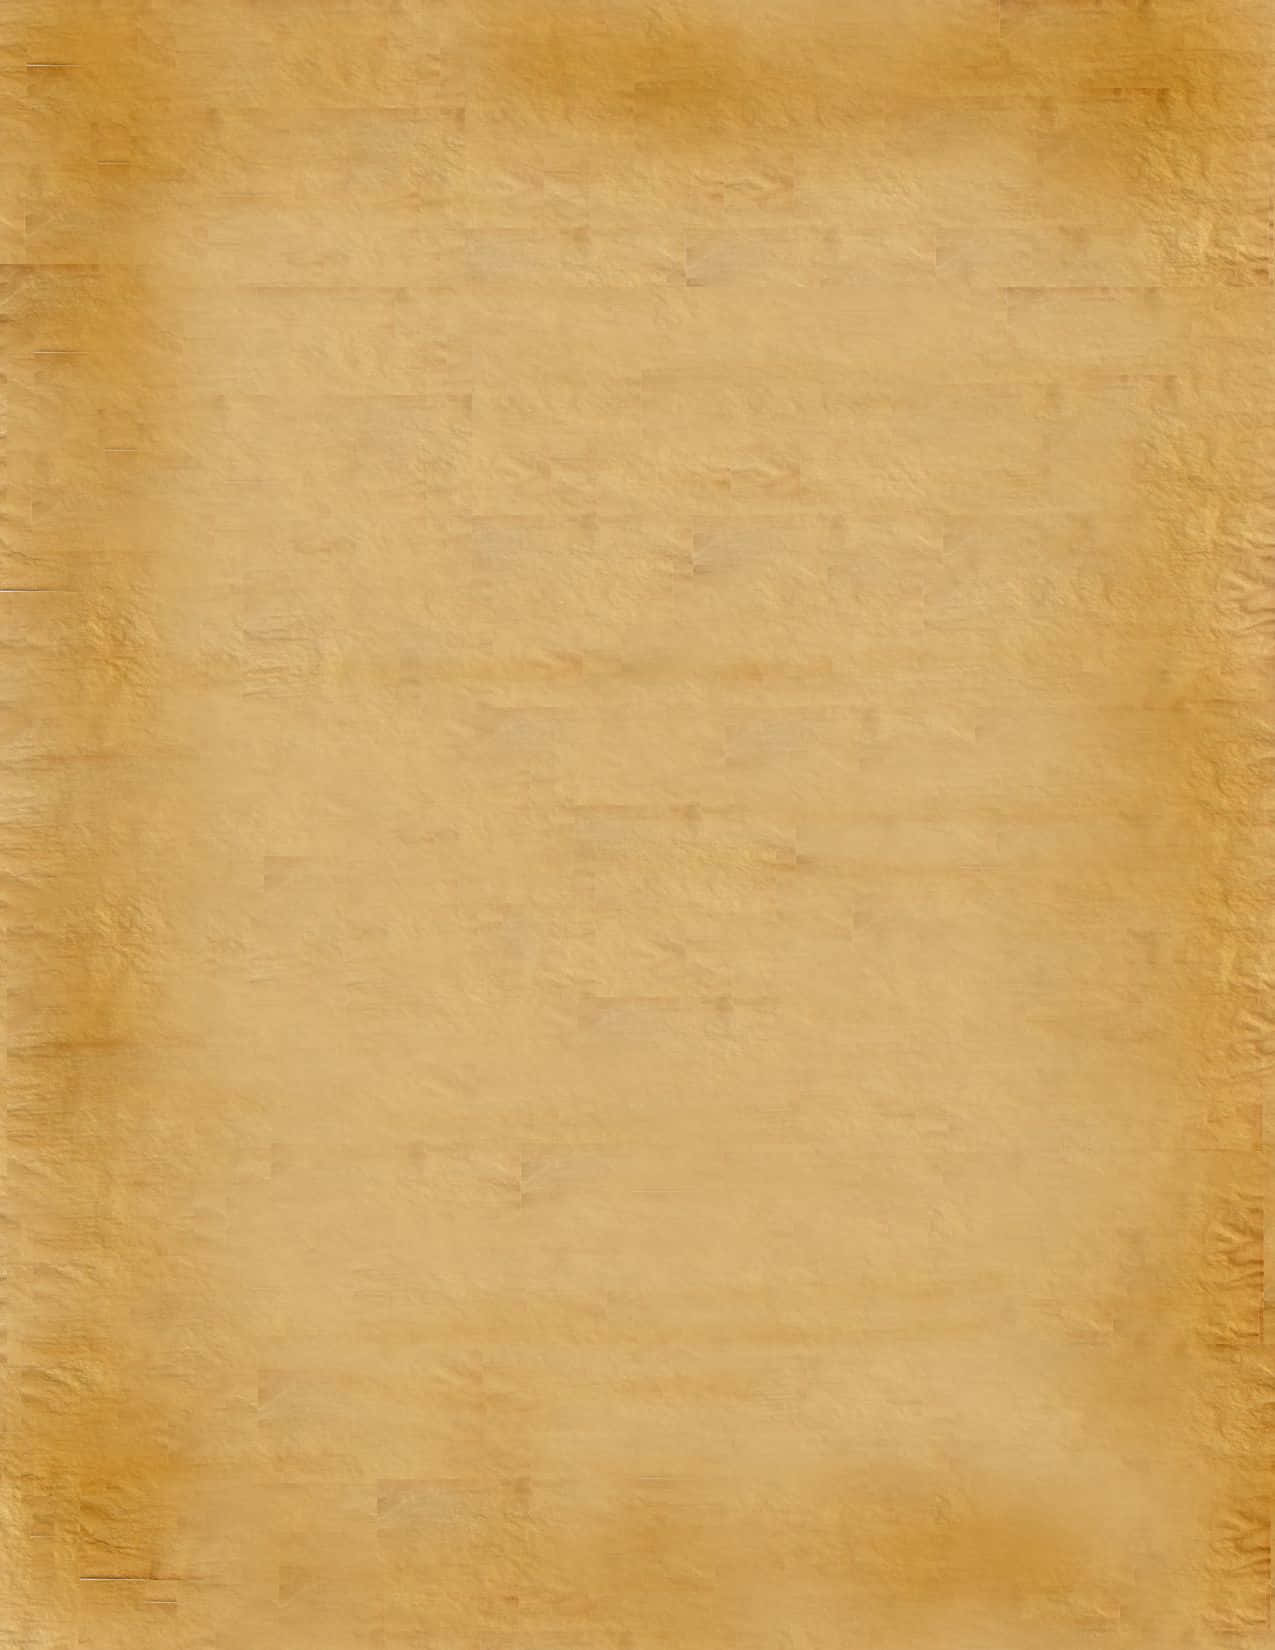 Parchment Paper Background Cream Brown